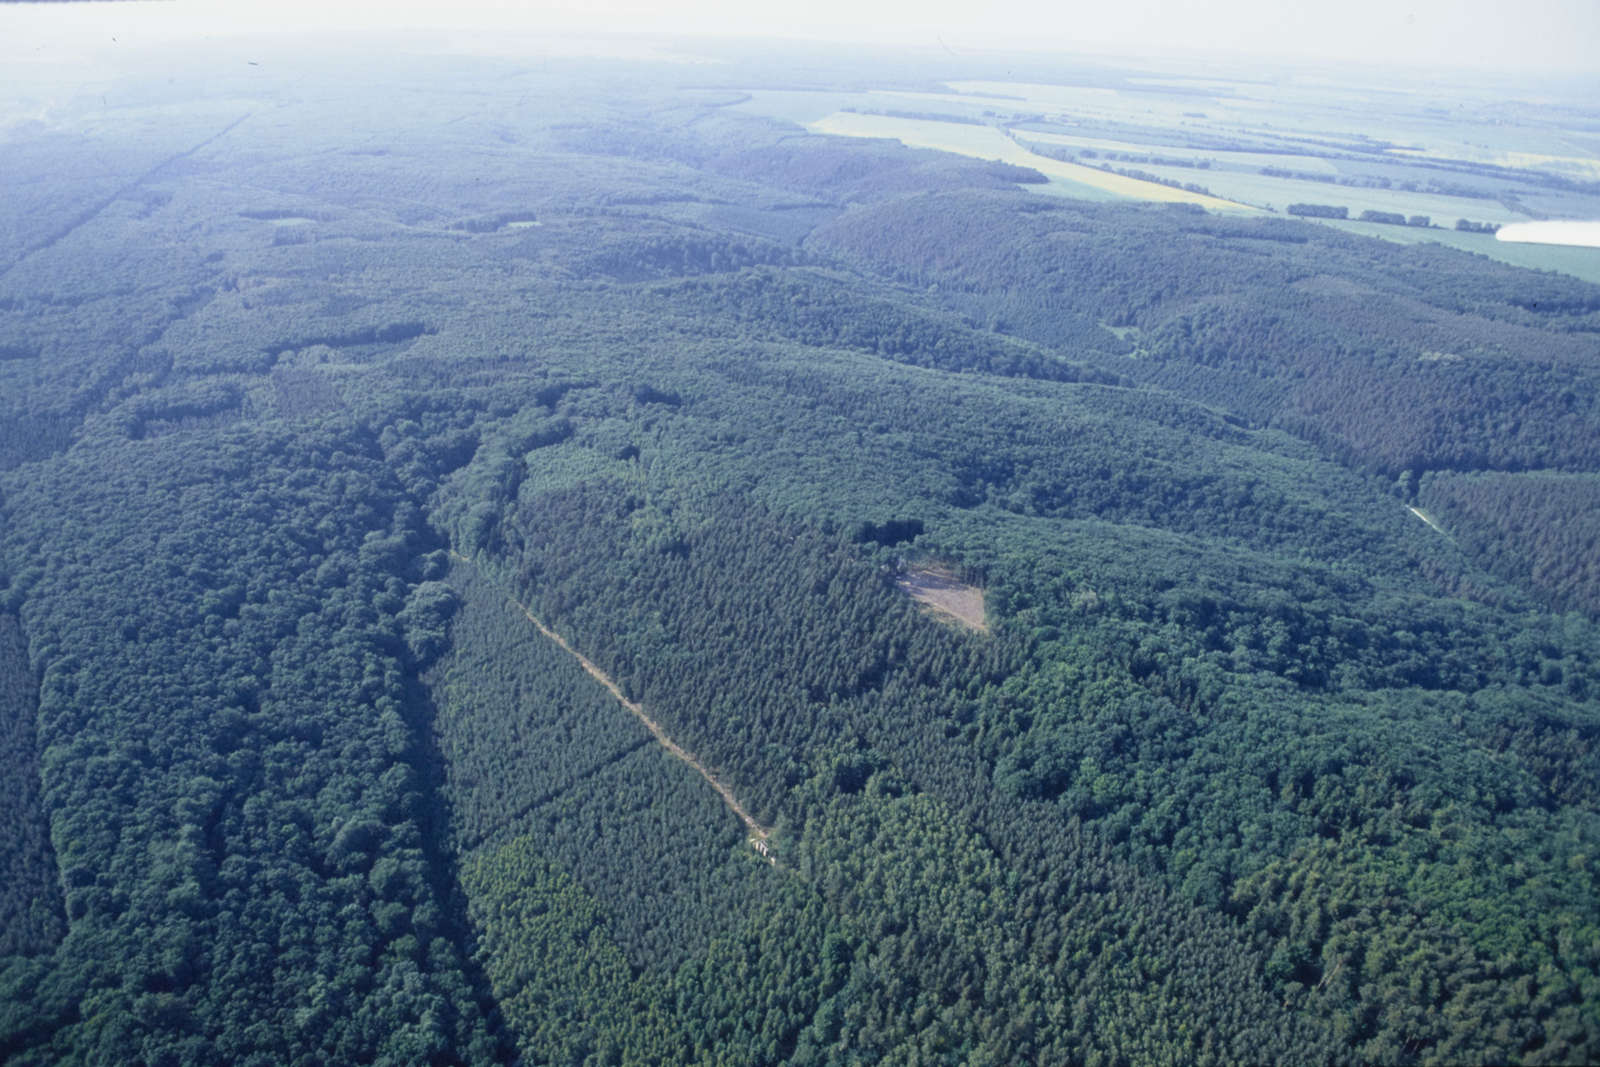 The Mittelberg hill near Nebra, aerial photograph.